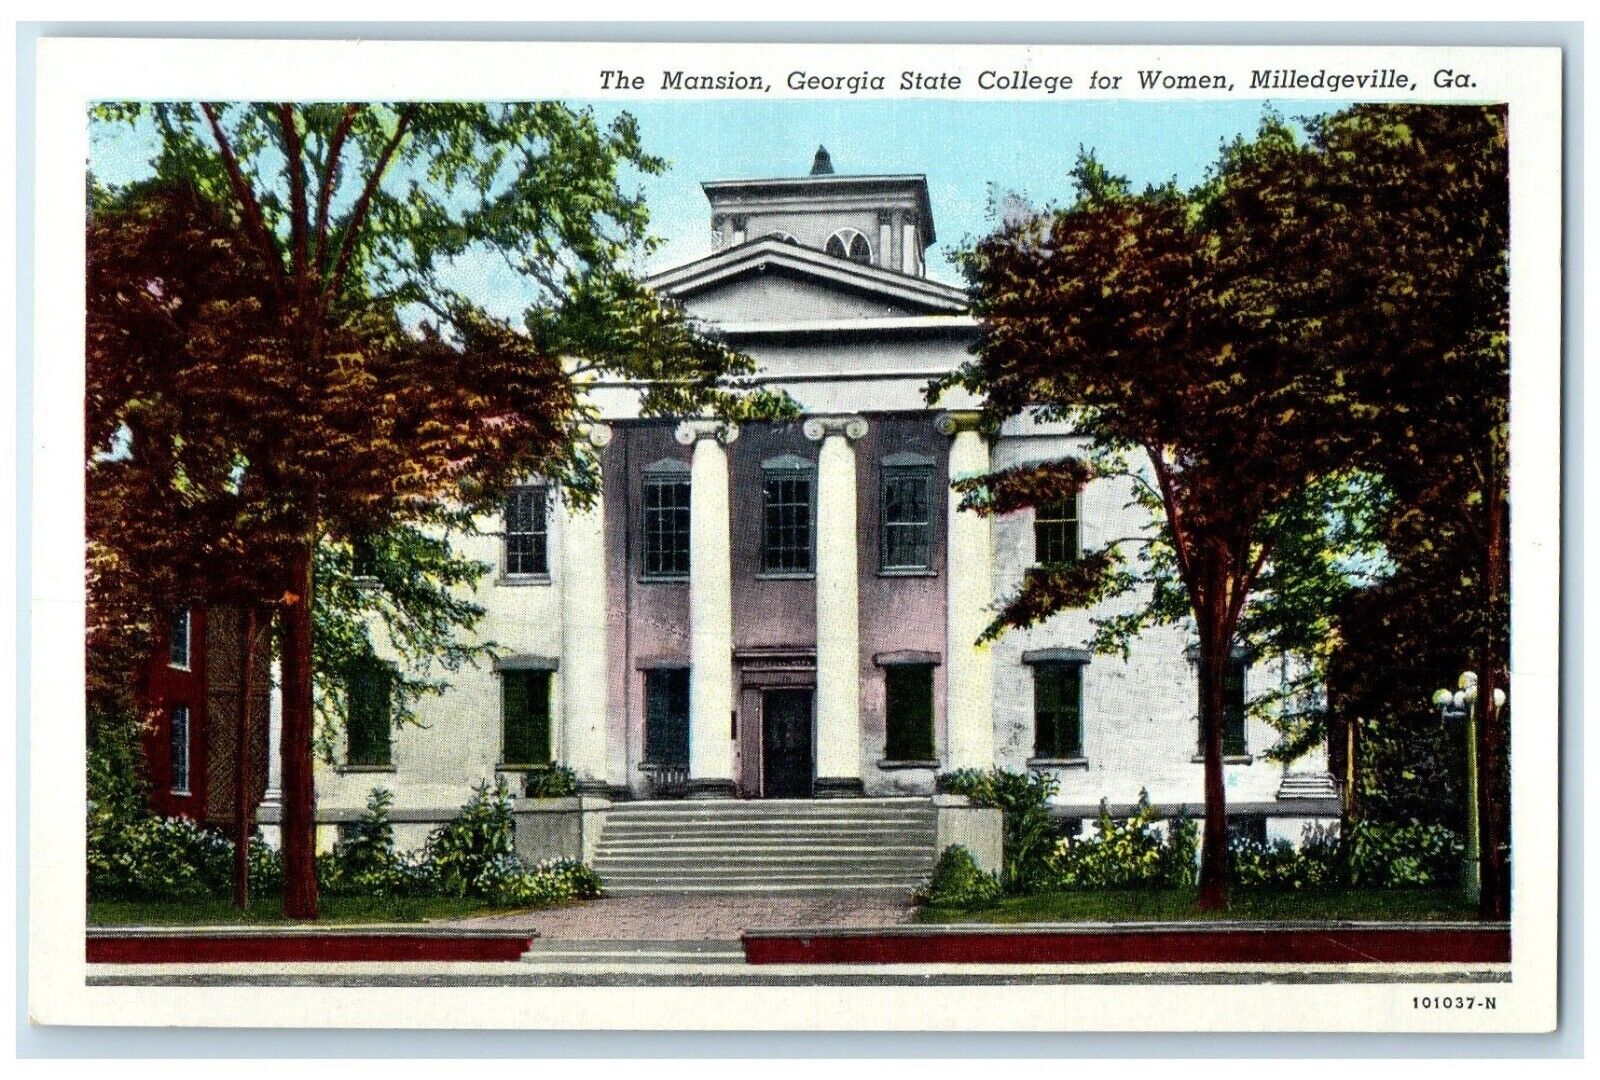 c1940 Mansion Georgia State College Women Milledgeville Georgia Vintage Postcard